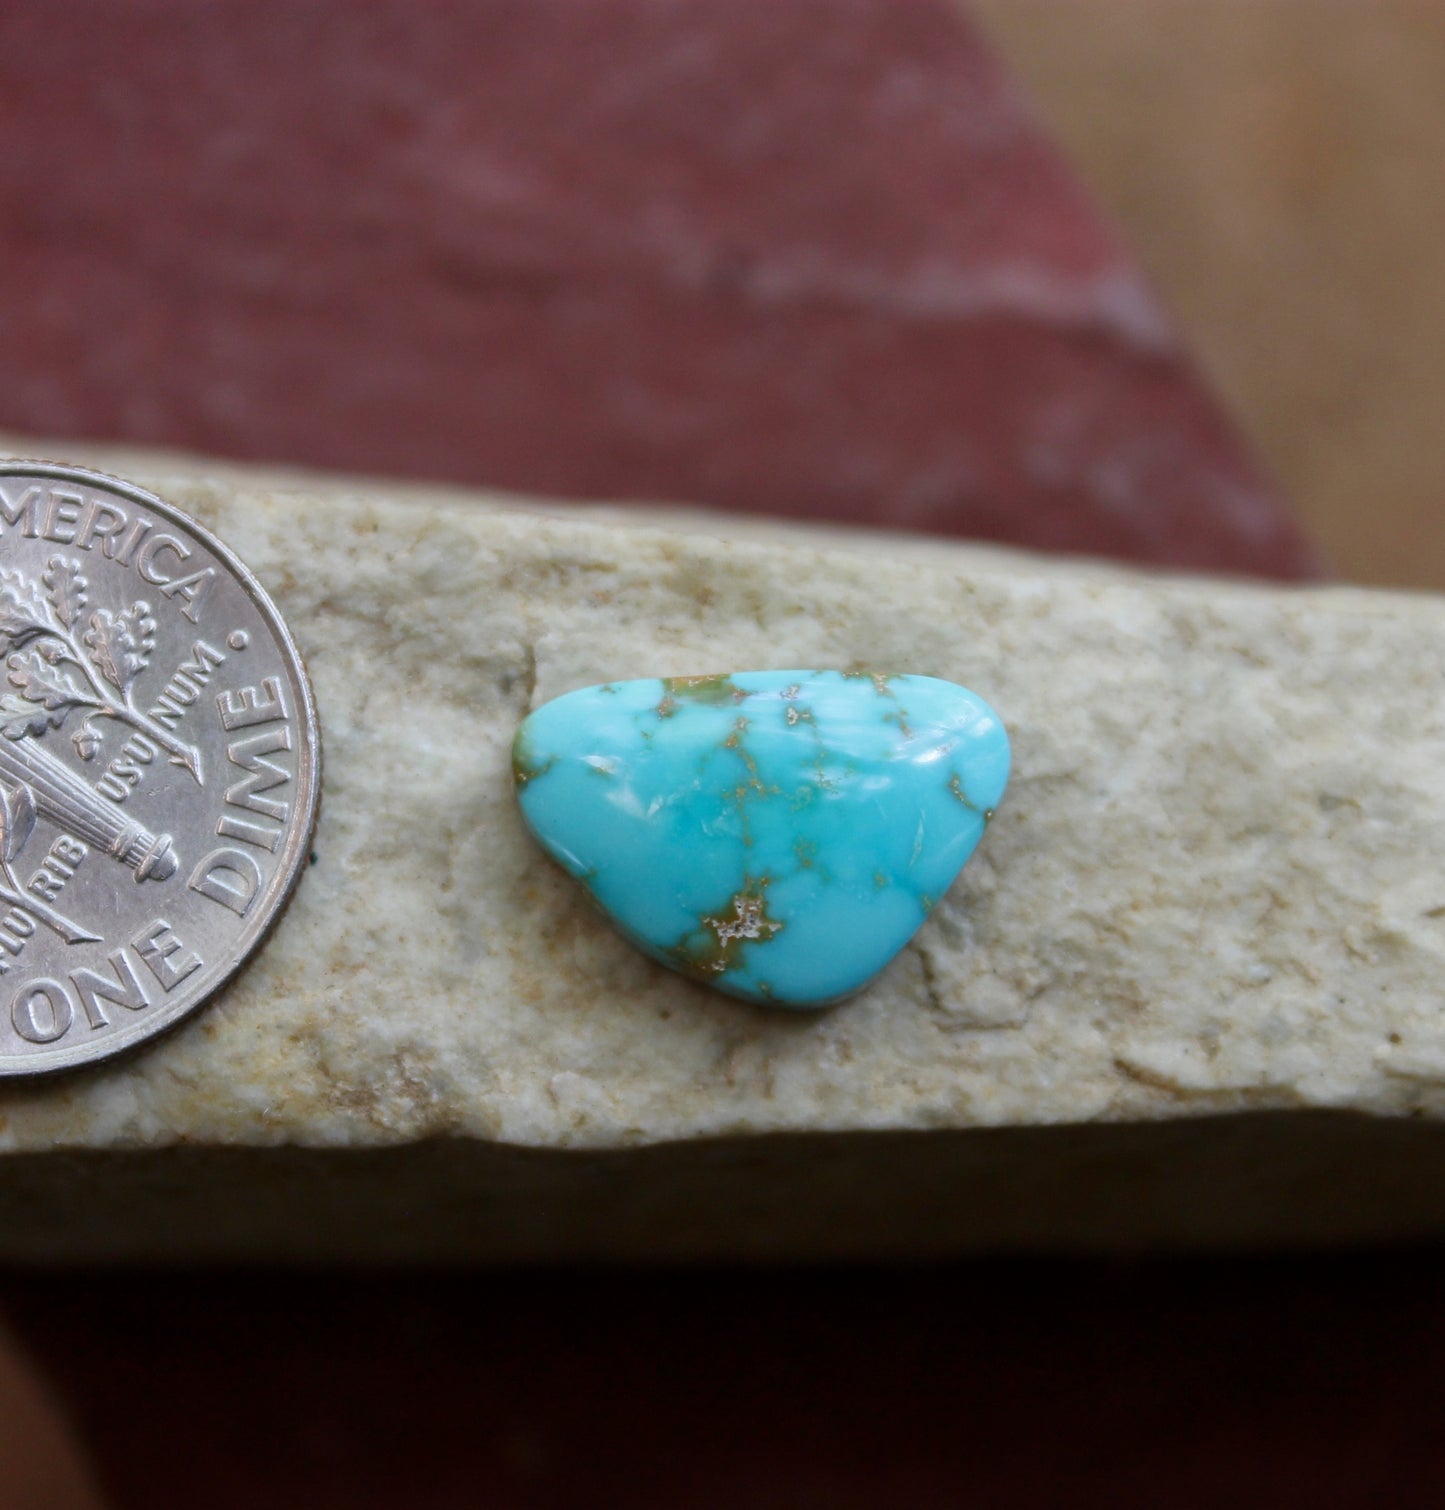 4 carat blue Stone Mountain Turquoise cabochon